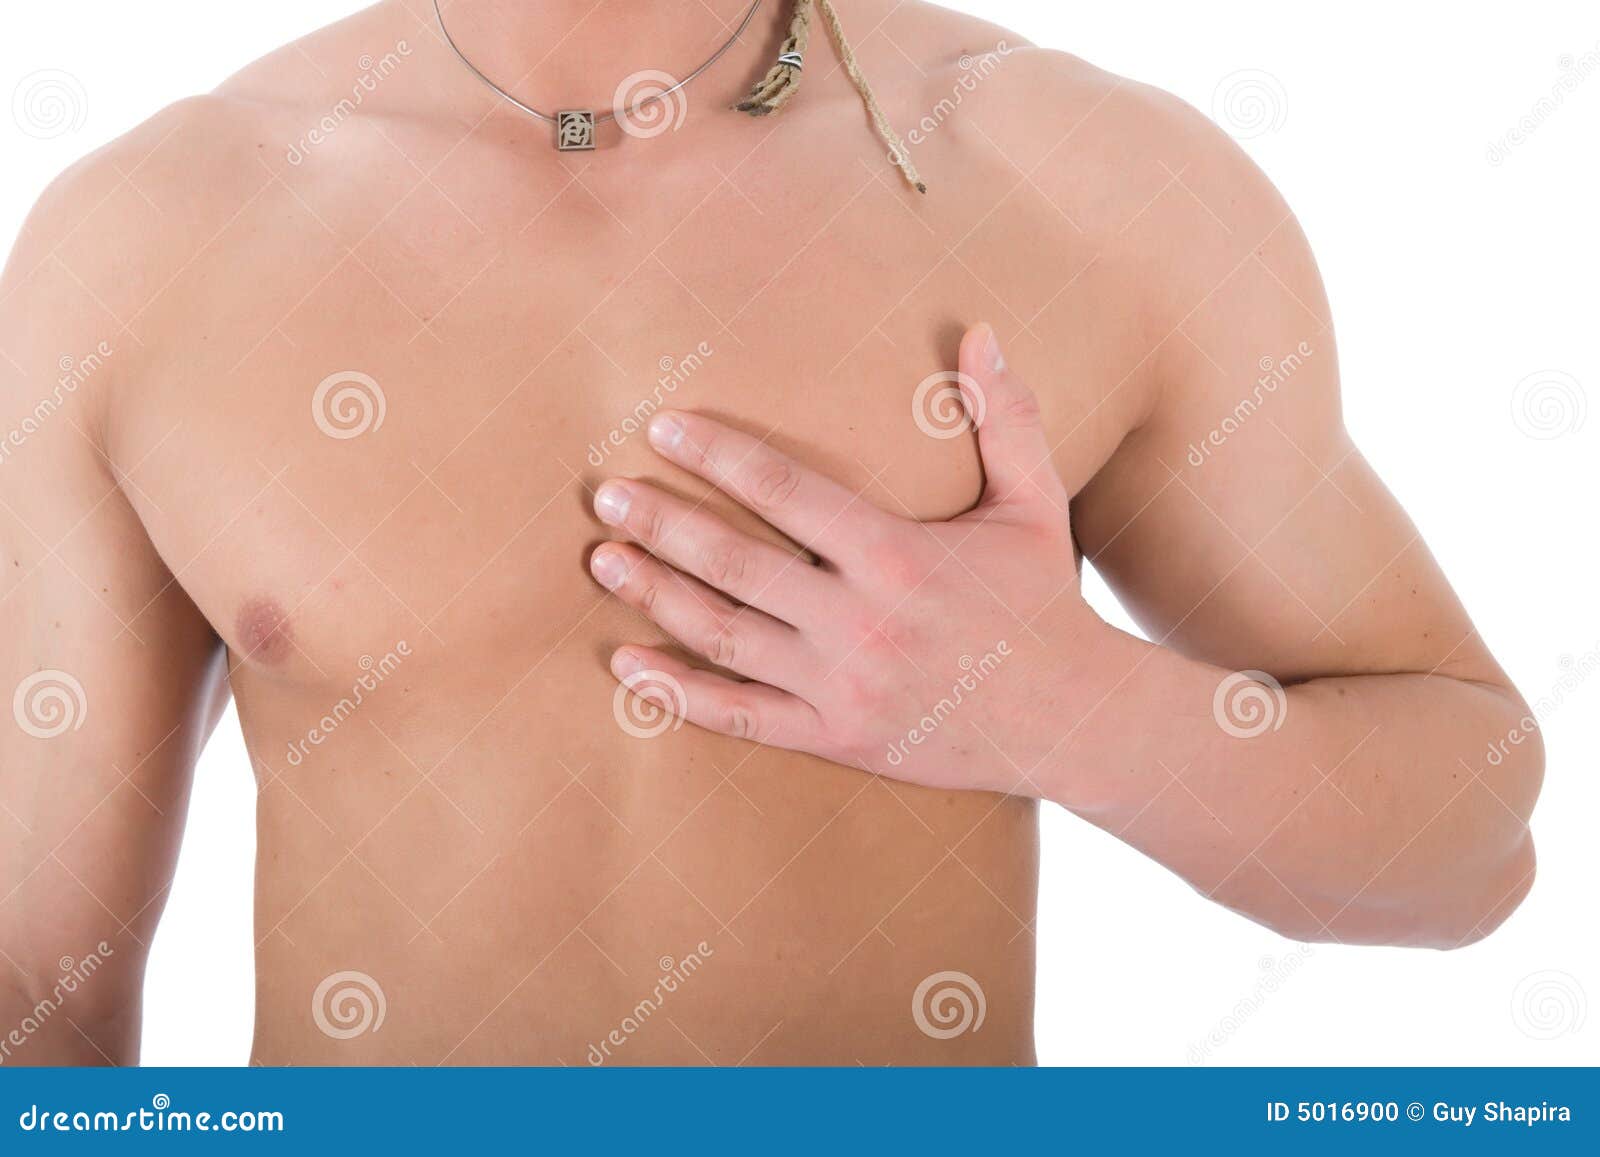 шишка в правой груди у мужчин (120) фото